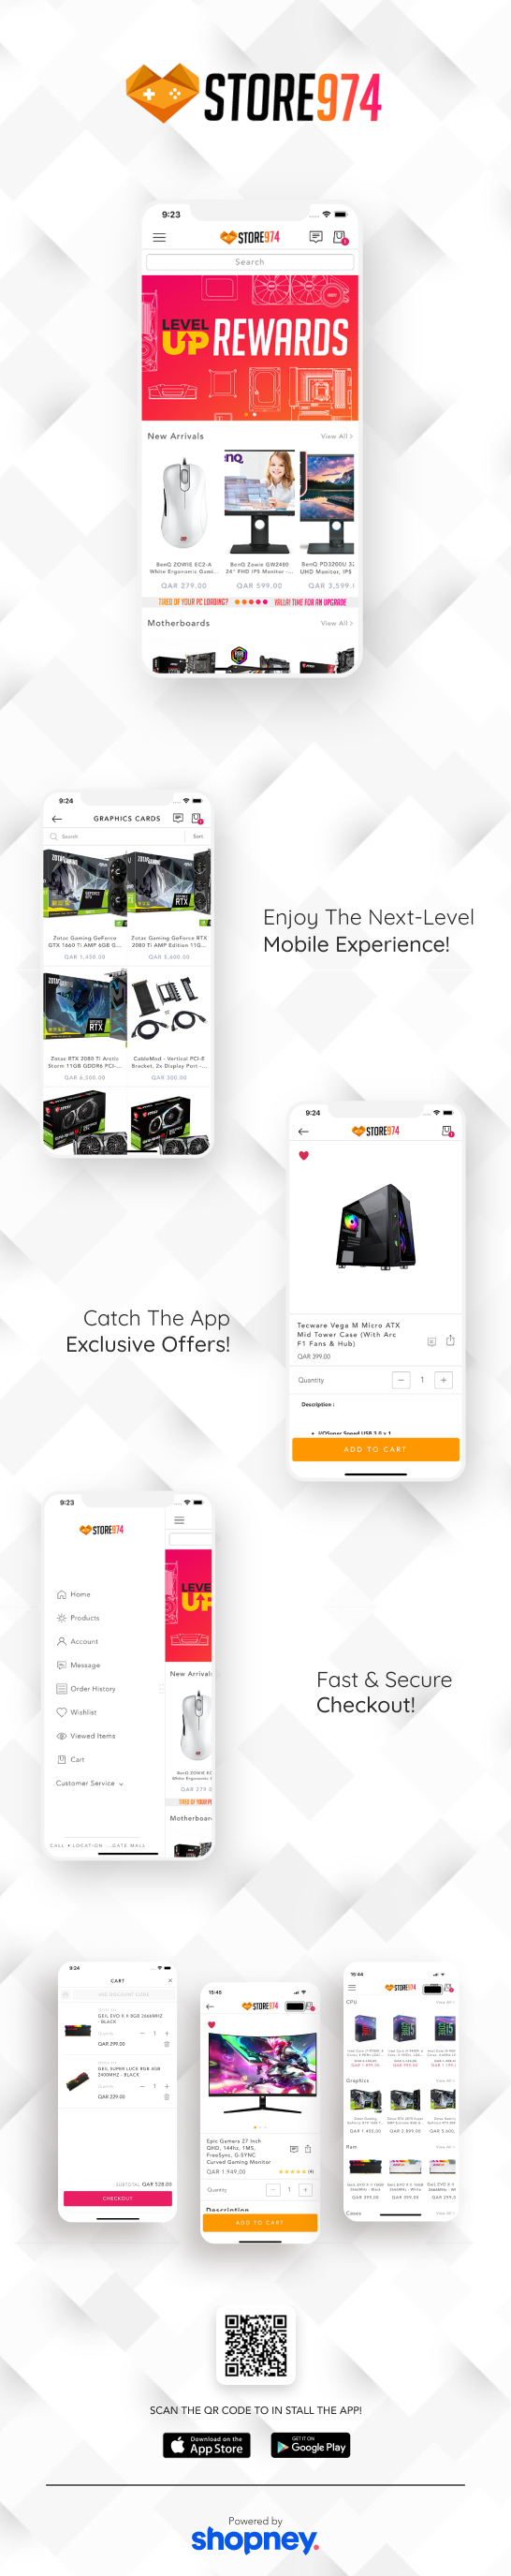 the mobile app design of Store974 app